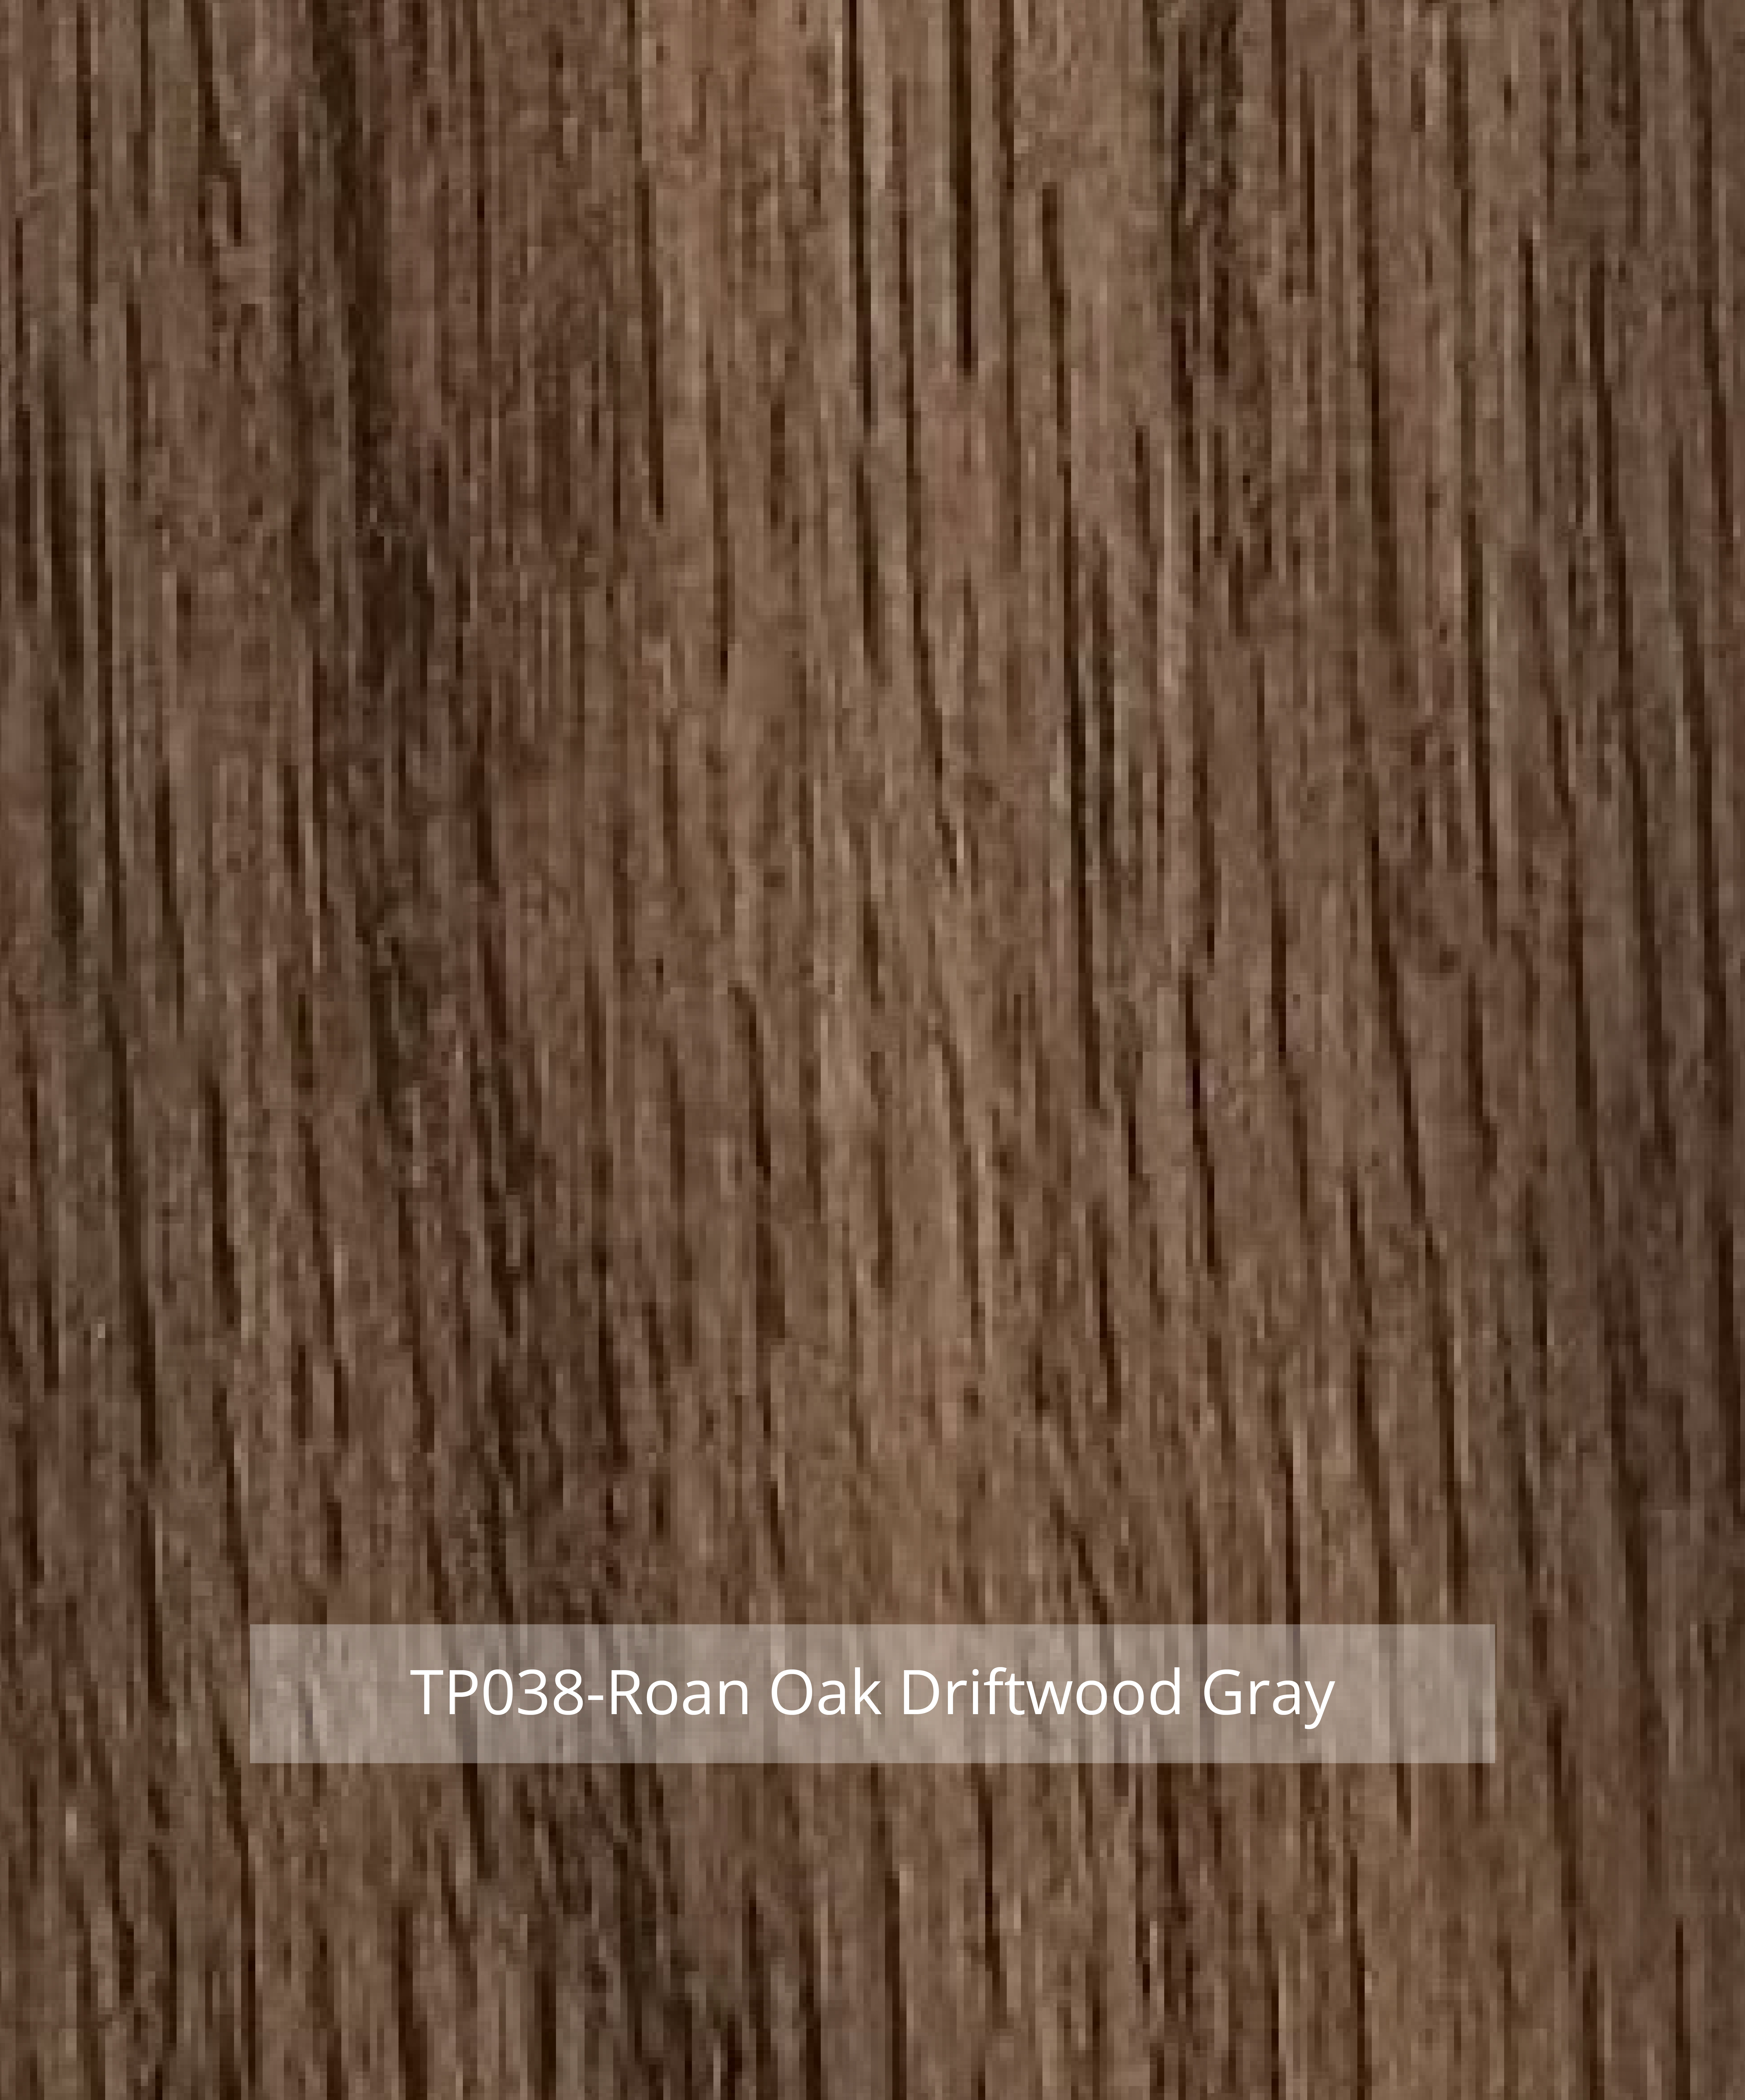 TP038 Roan Oak Driftwood Gray 01